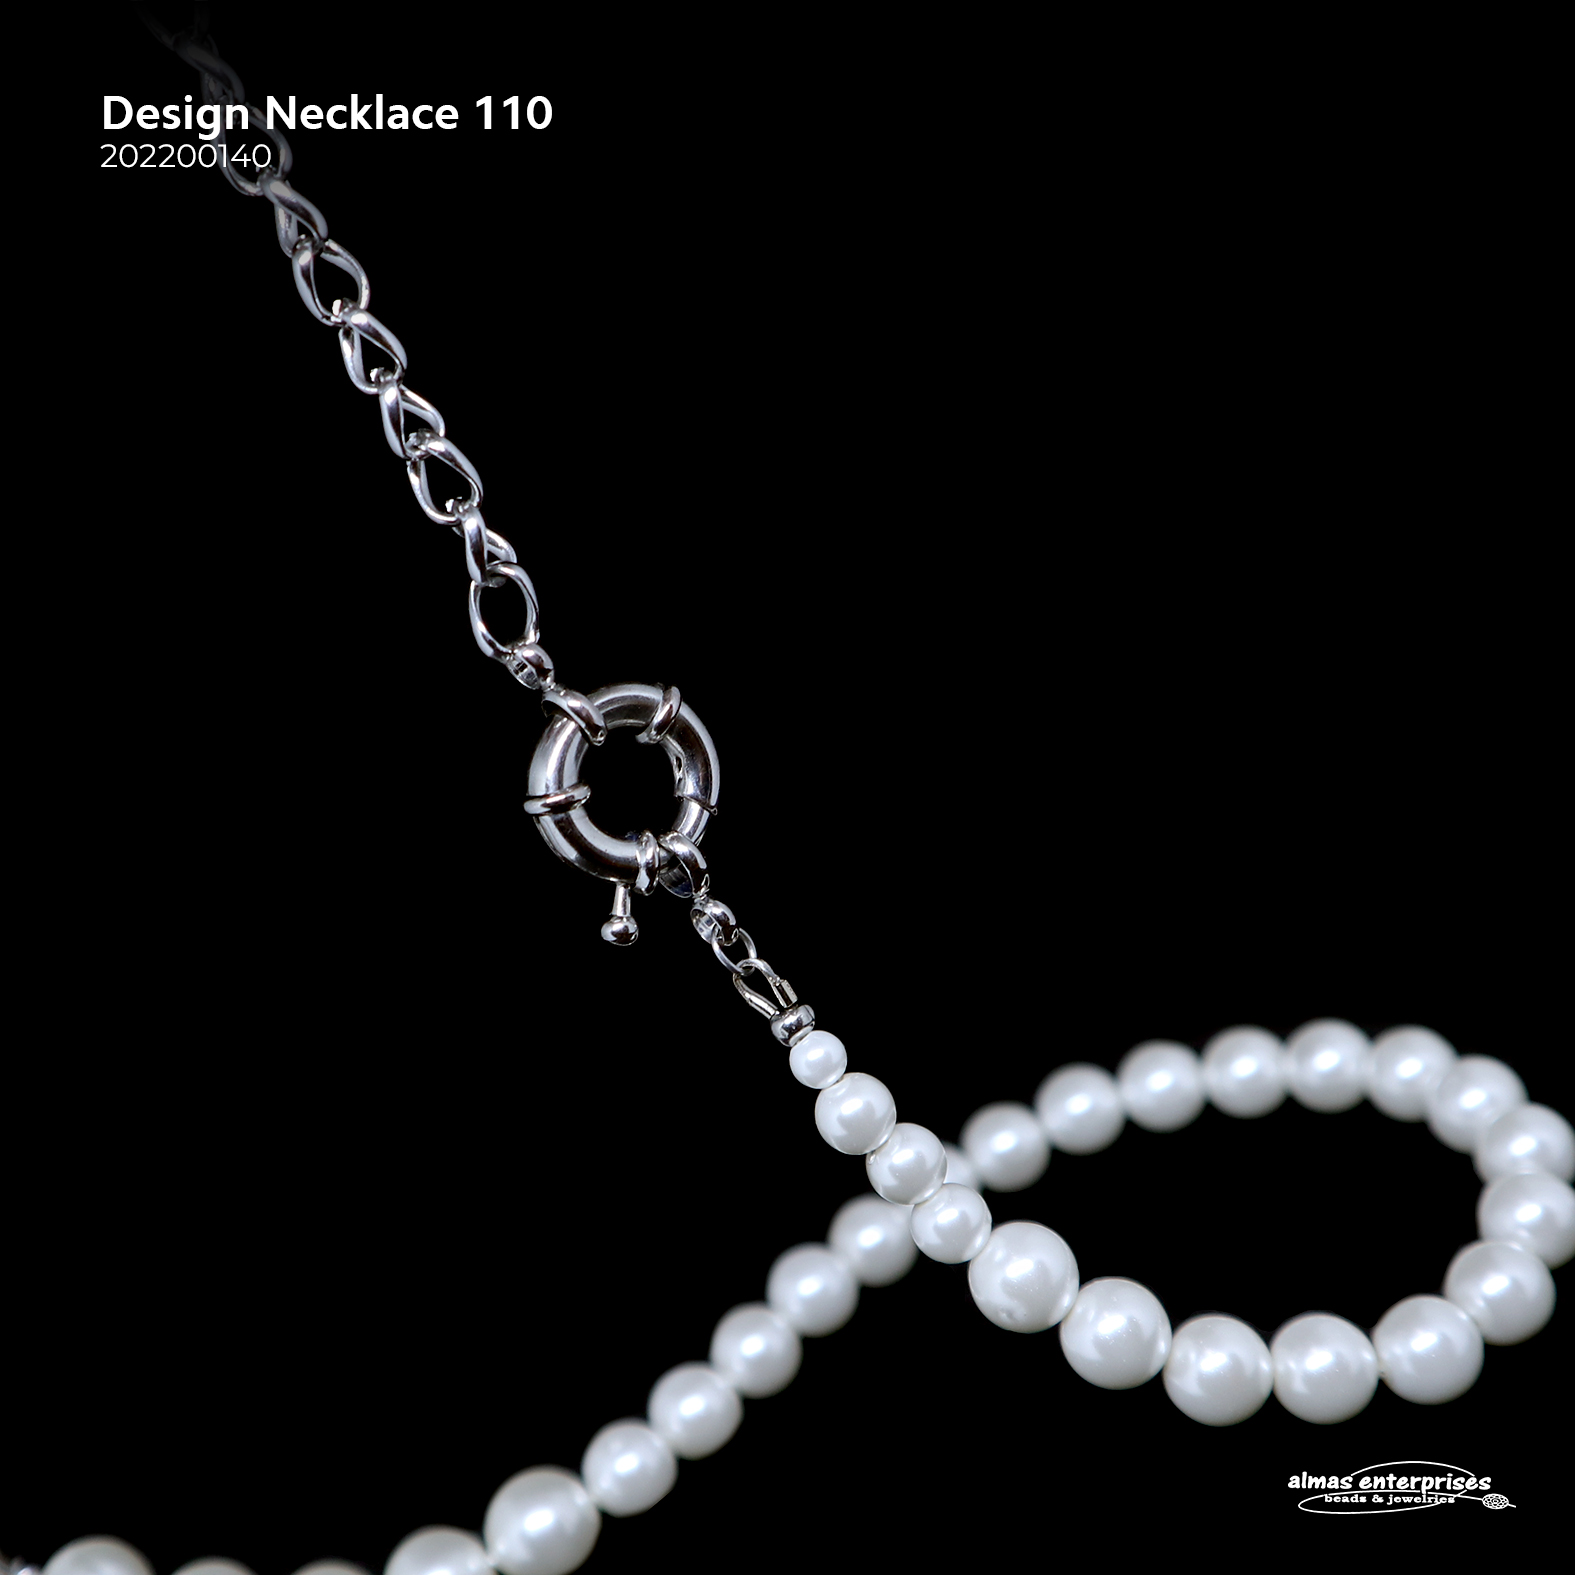 Design Necklace 110